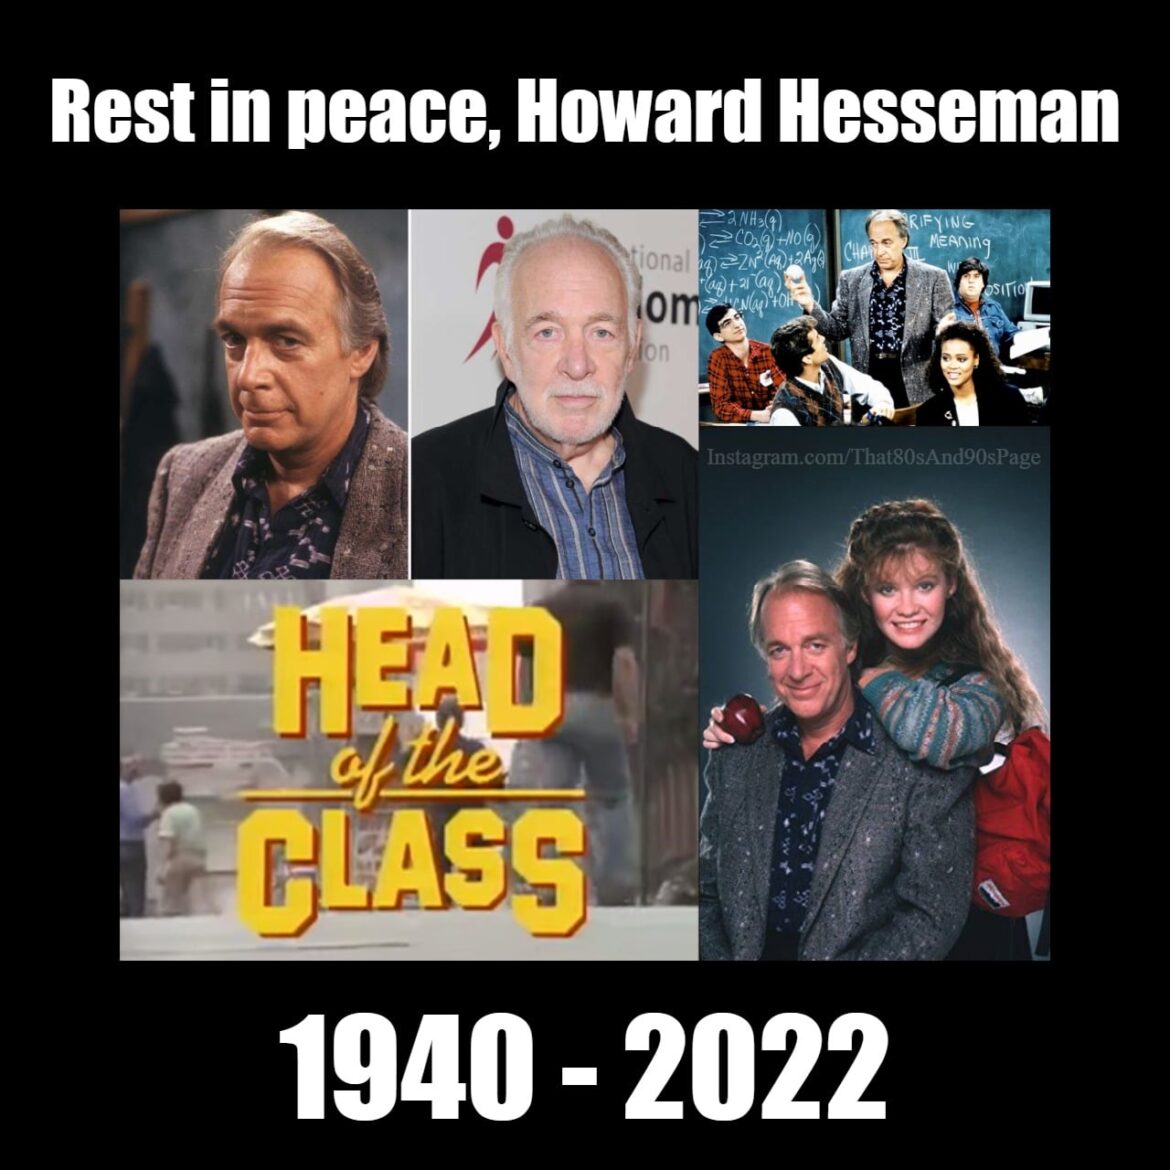 Howard Hesseman Passes Away